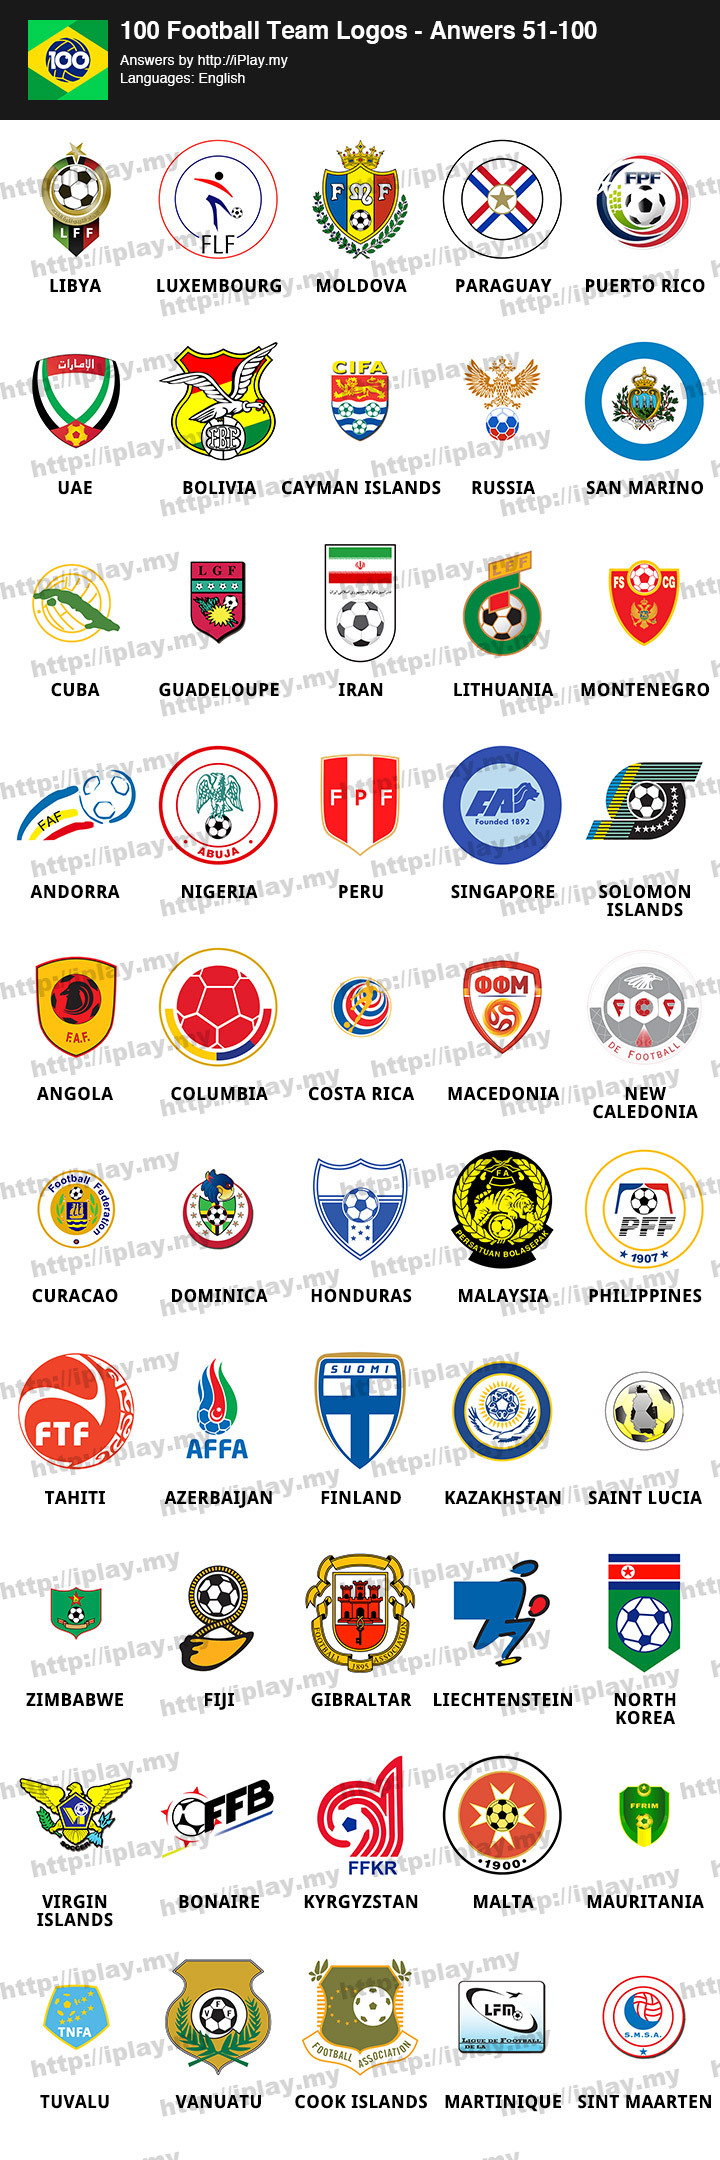 100-Football-Team-Logos-Answers-51-100